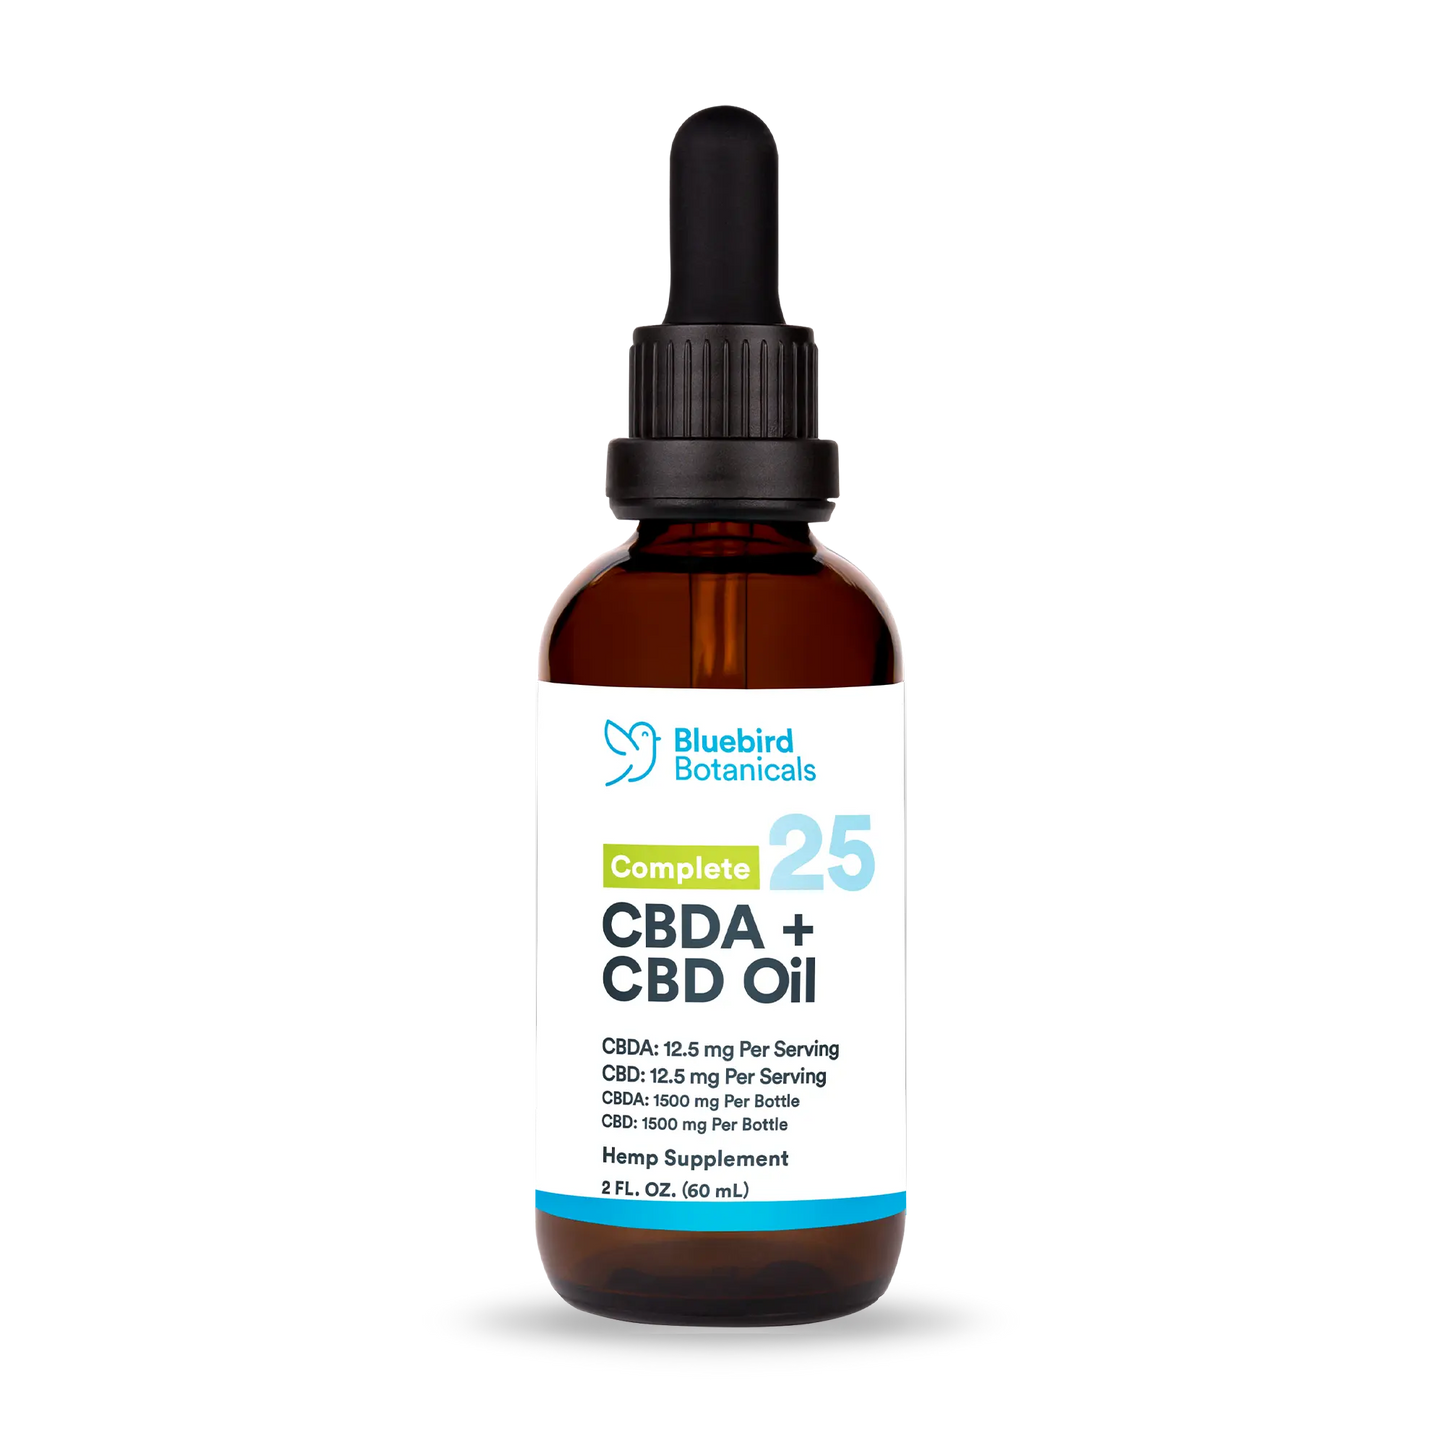 Complete CBDA + CBD Oil - Extra Strength (25 mg/serving)